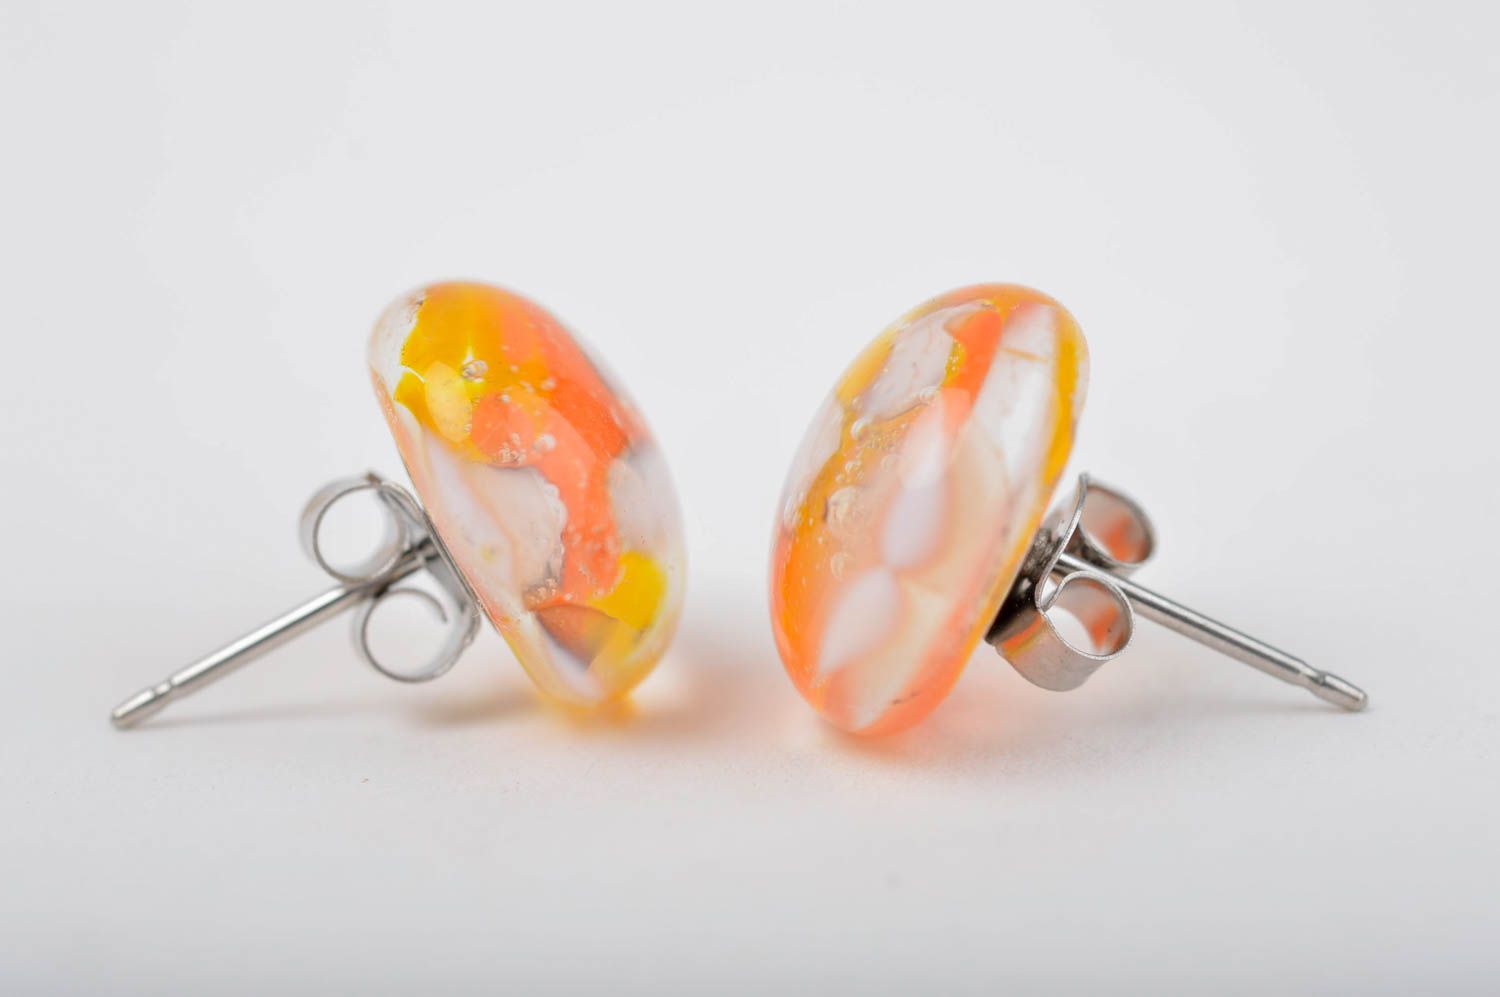 Unusual handmade glass earrings stud earrings design artisan jewelry designs photo 2